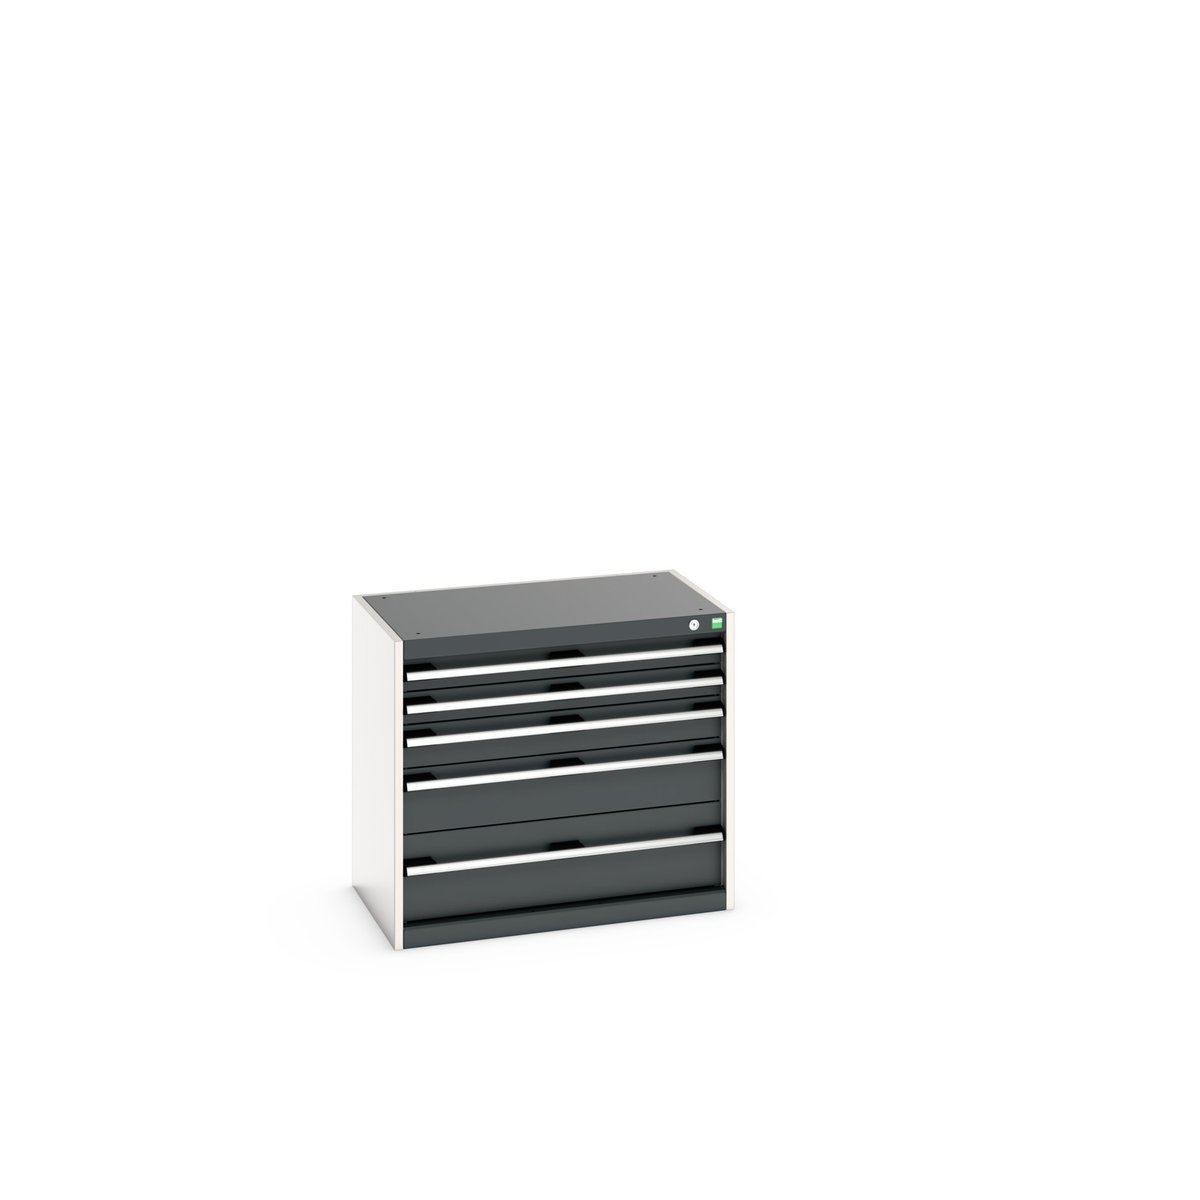 40012095. - cubio drawer cabinet